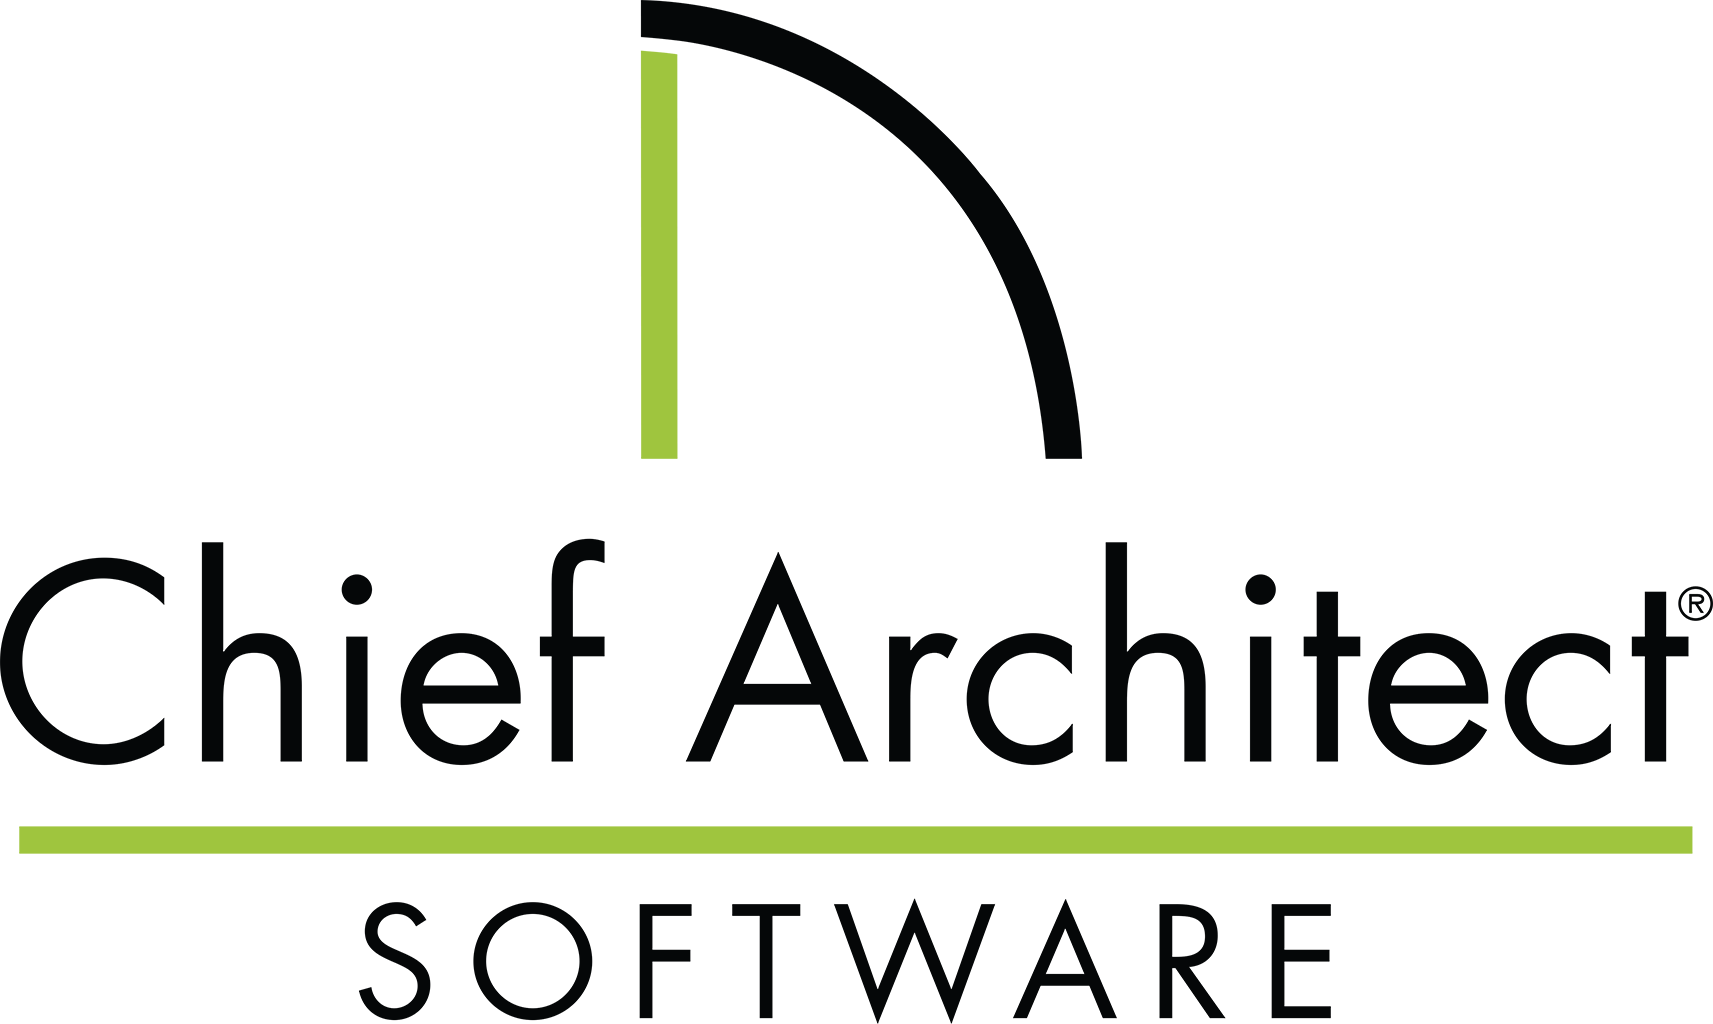 chief-architect-logo